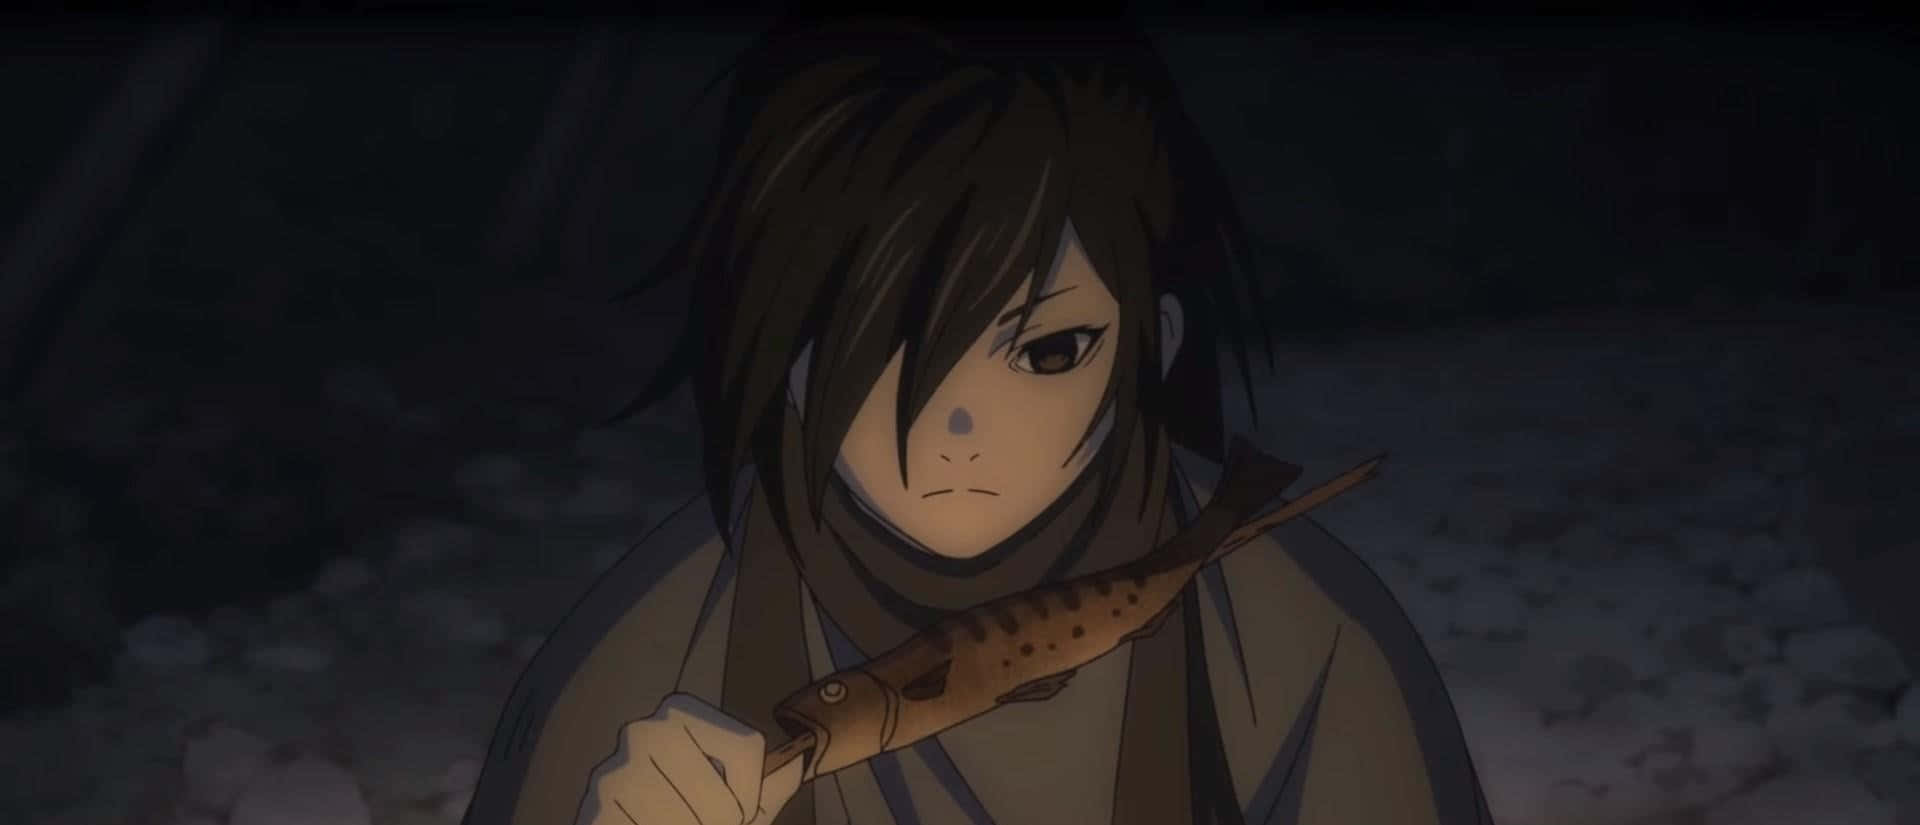 Image  A Young Hyakkimaru in the Series "Dororo"